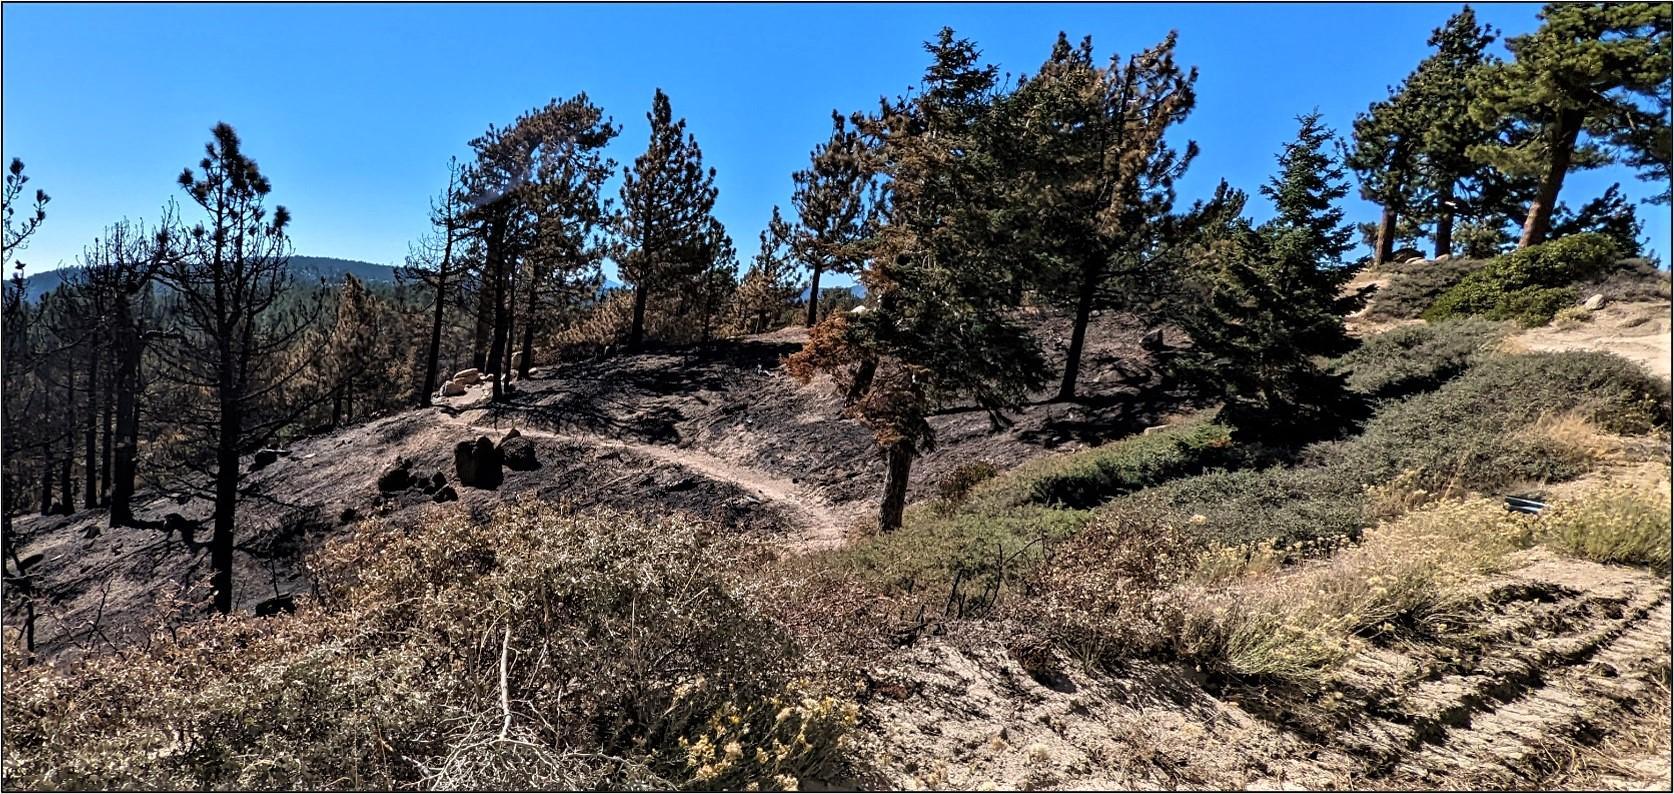 Image showing Skyline Trail along ridge in Radford burned area